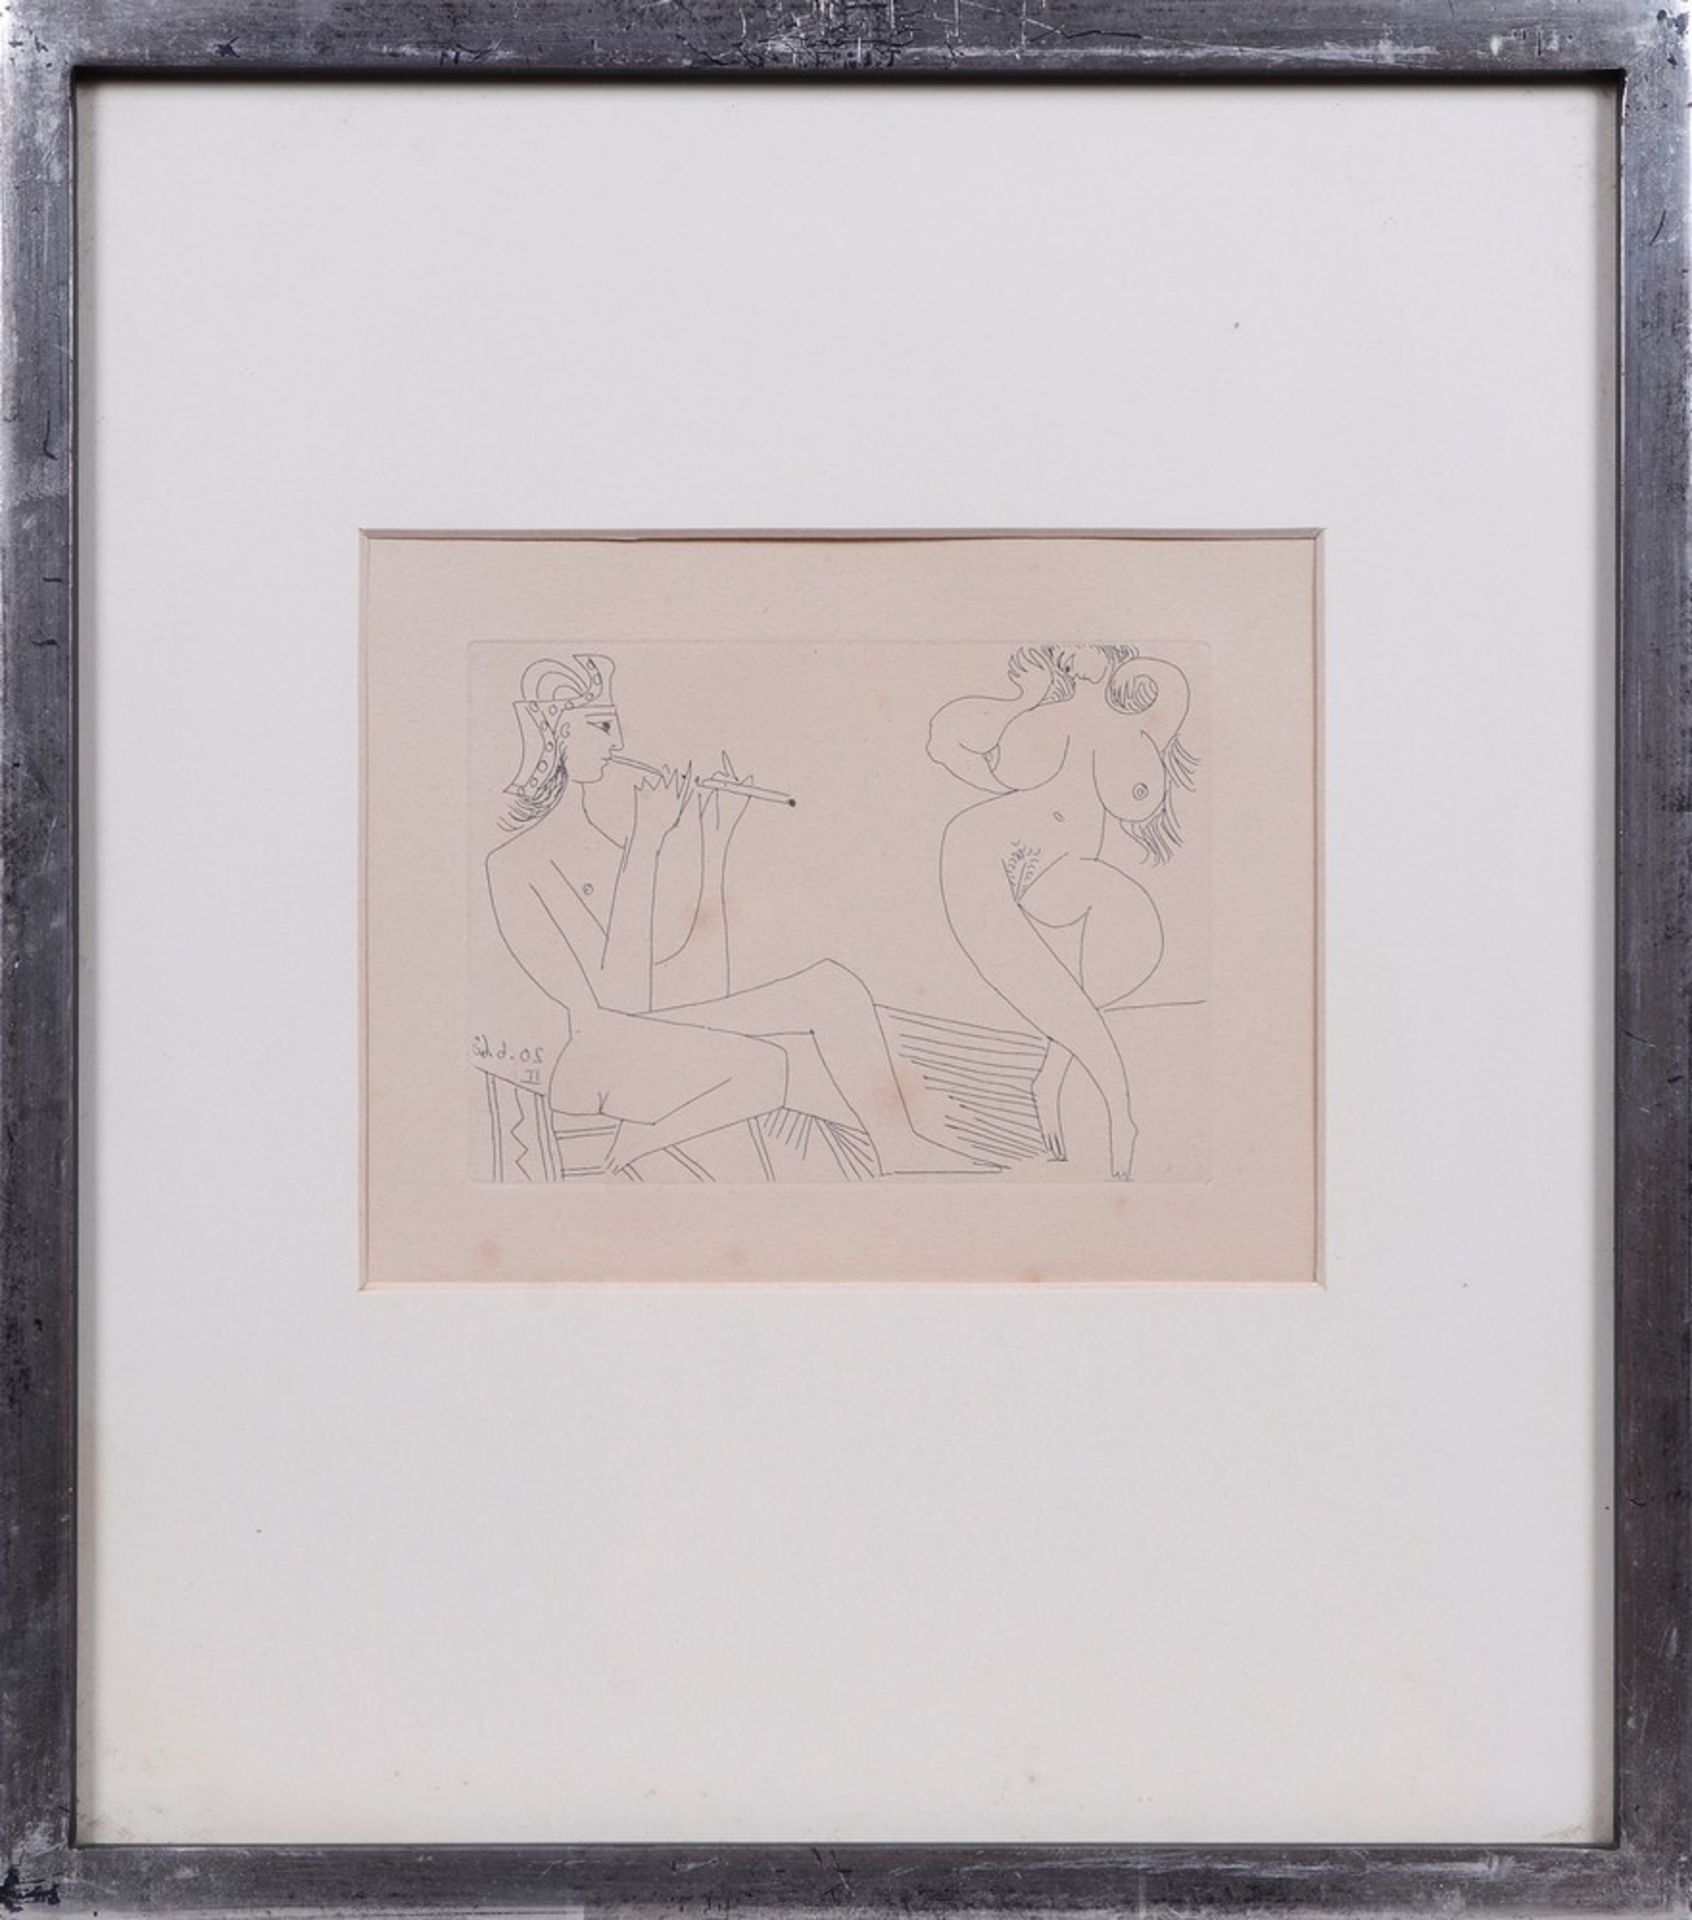 Pablo Ruiz Picasso (1881, Malaga, Spain - 1973, Mougins, France) - Image 3 of 6